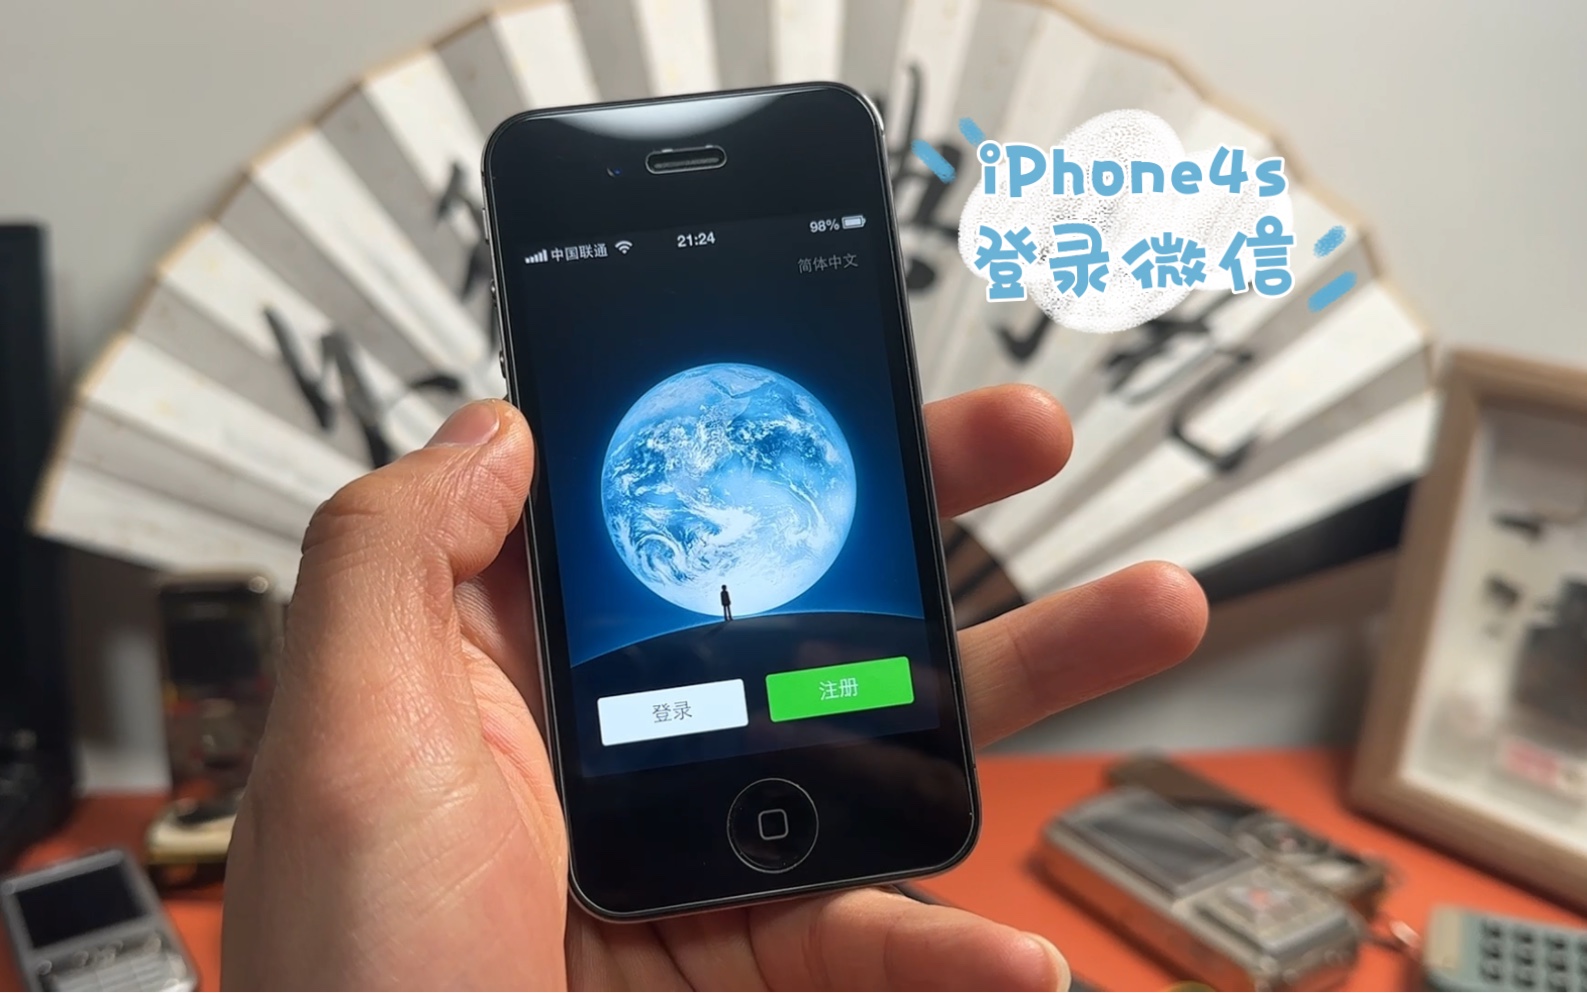 iPhone4s ios6.13如何登录微信！